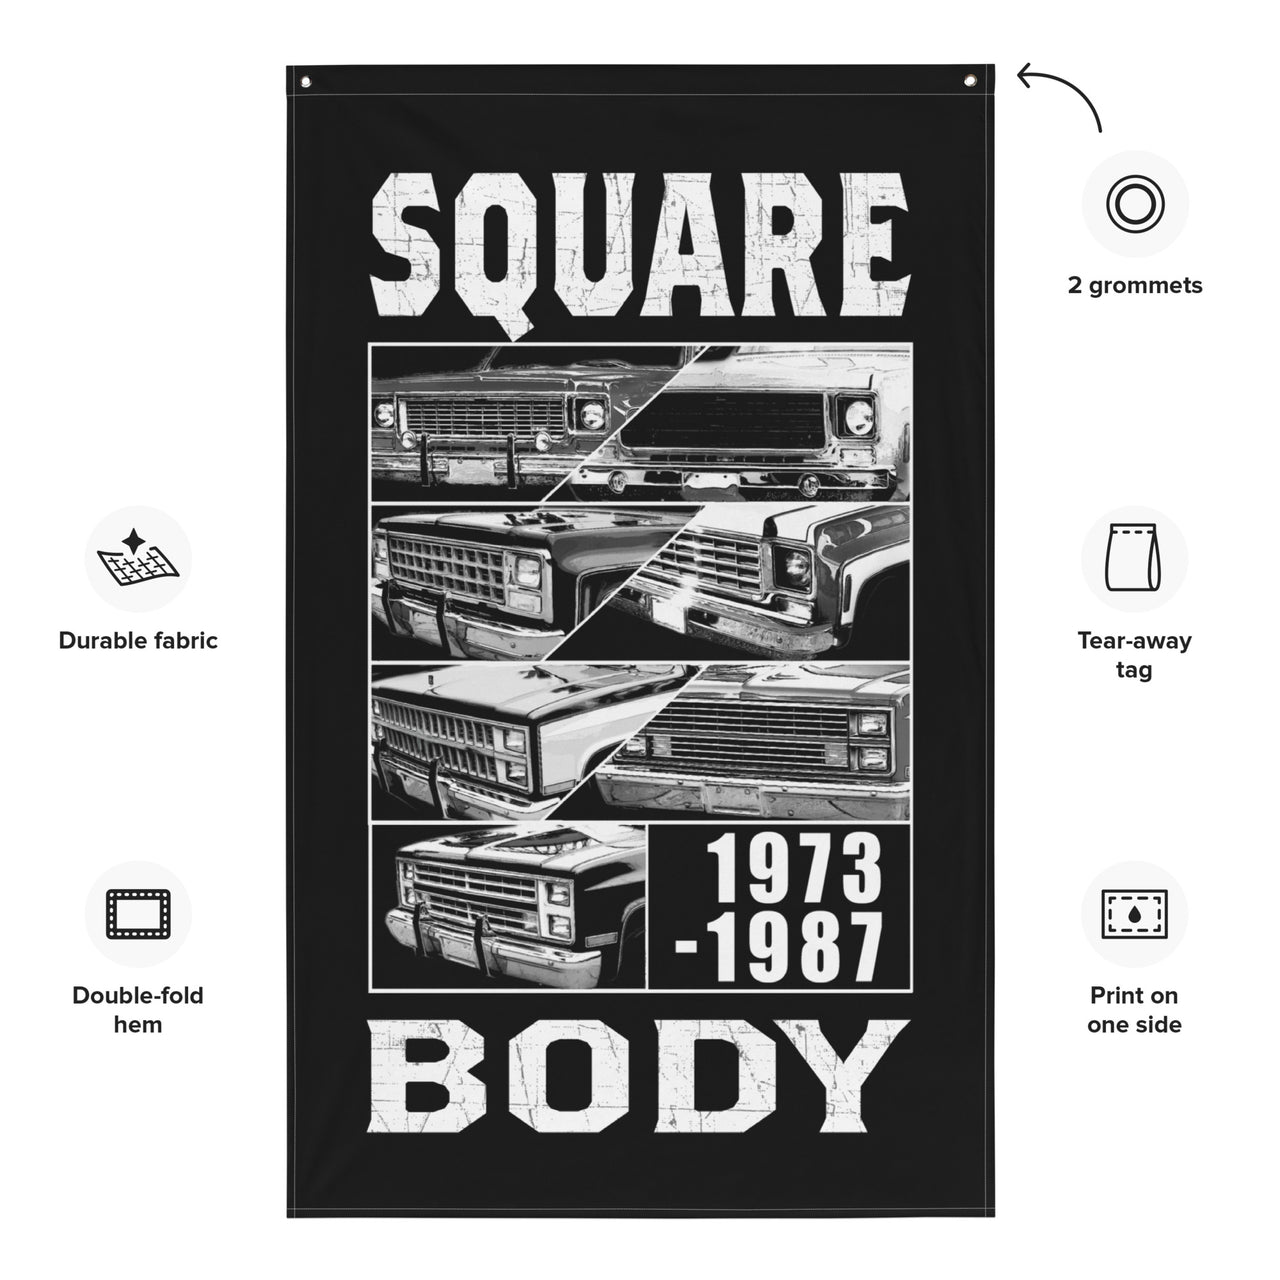 Square Body Truck Flag details